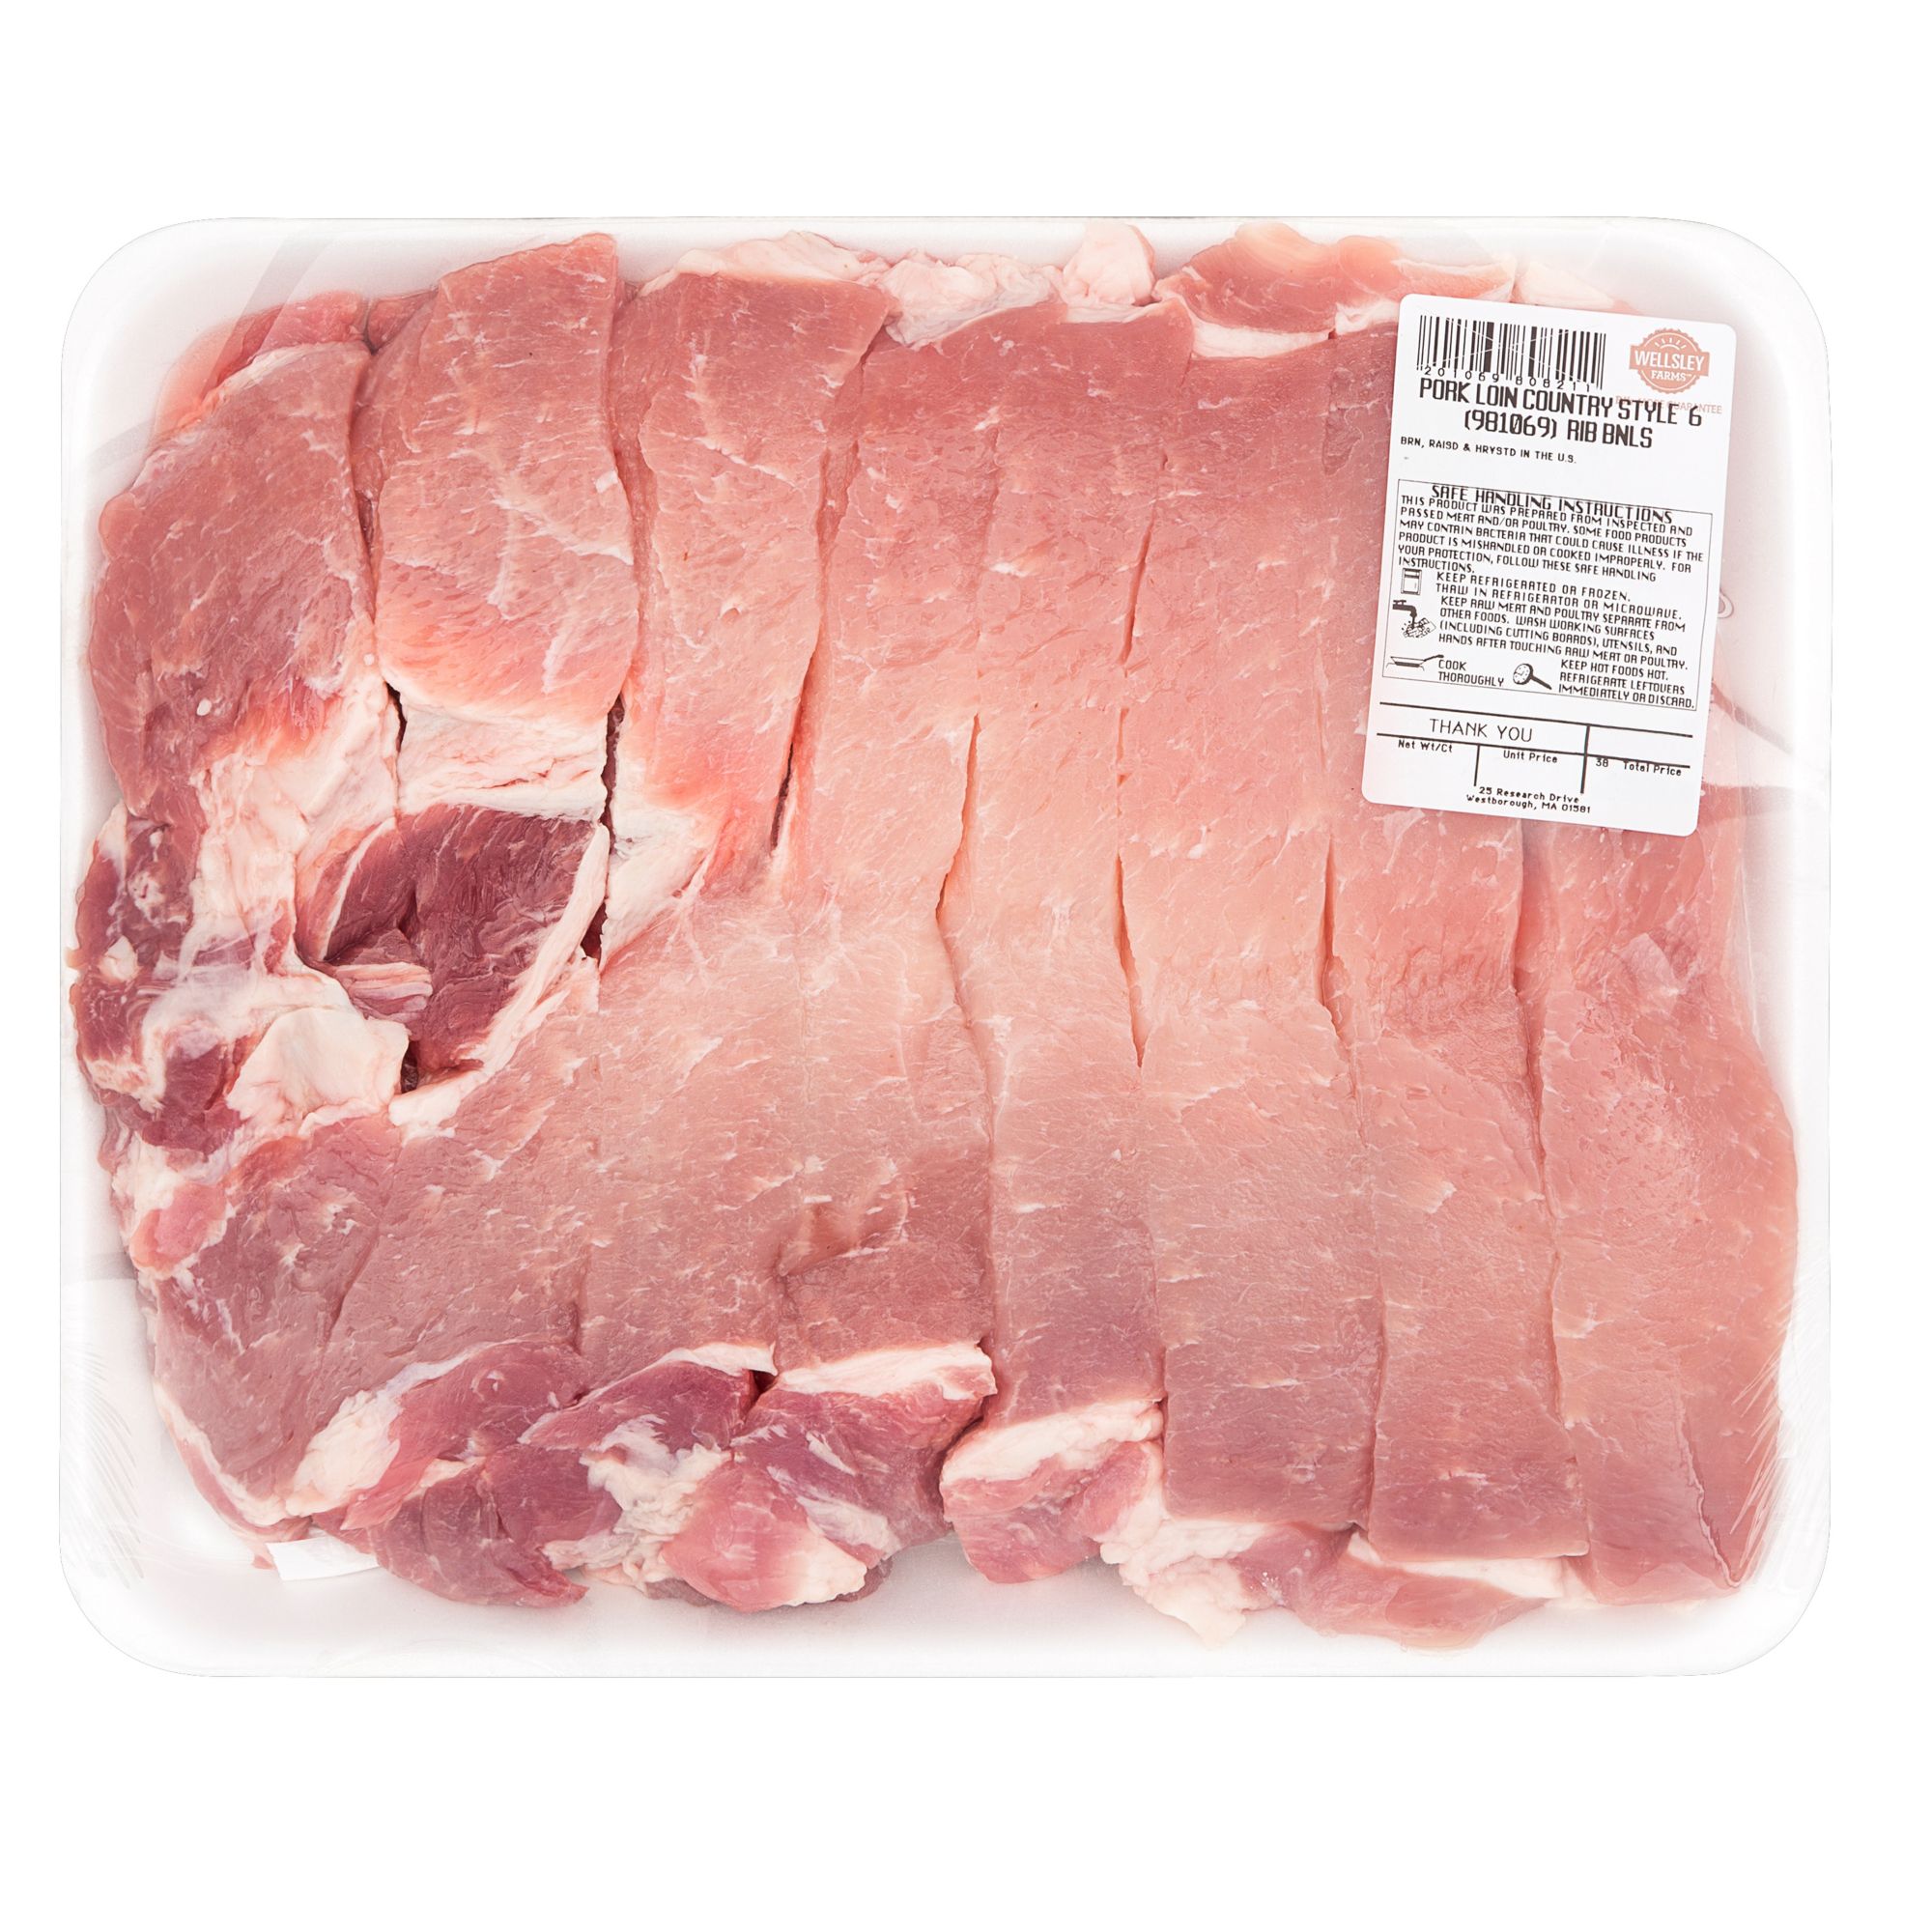 Wellsley Farms Pork Loin Country Style Boneless Ribs, 3.75 - 4.5 lbs